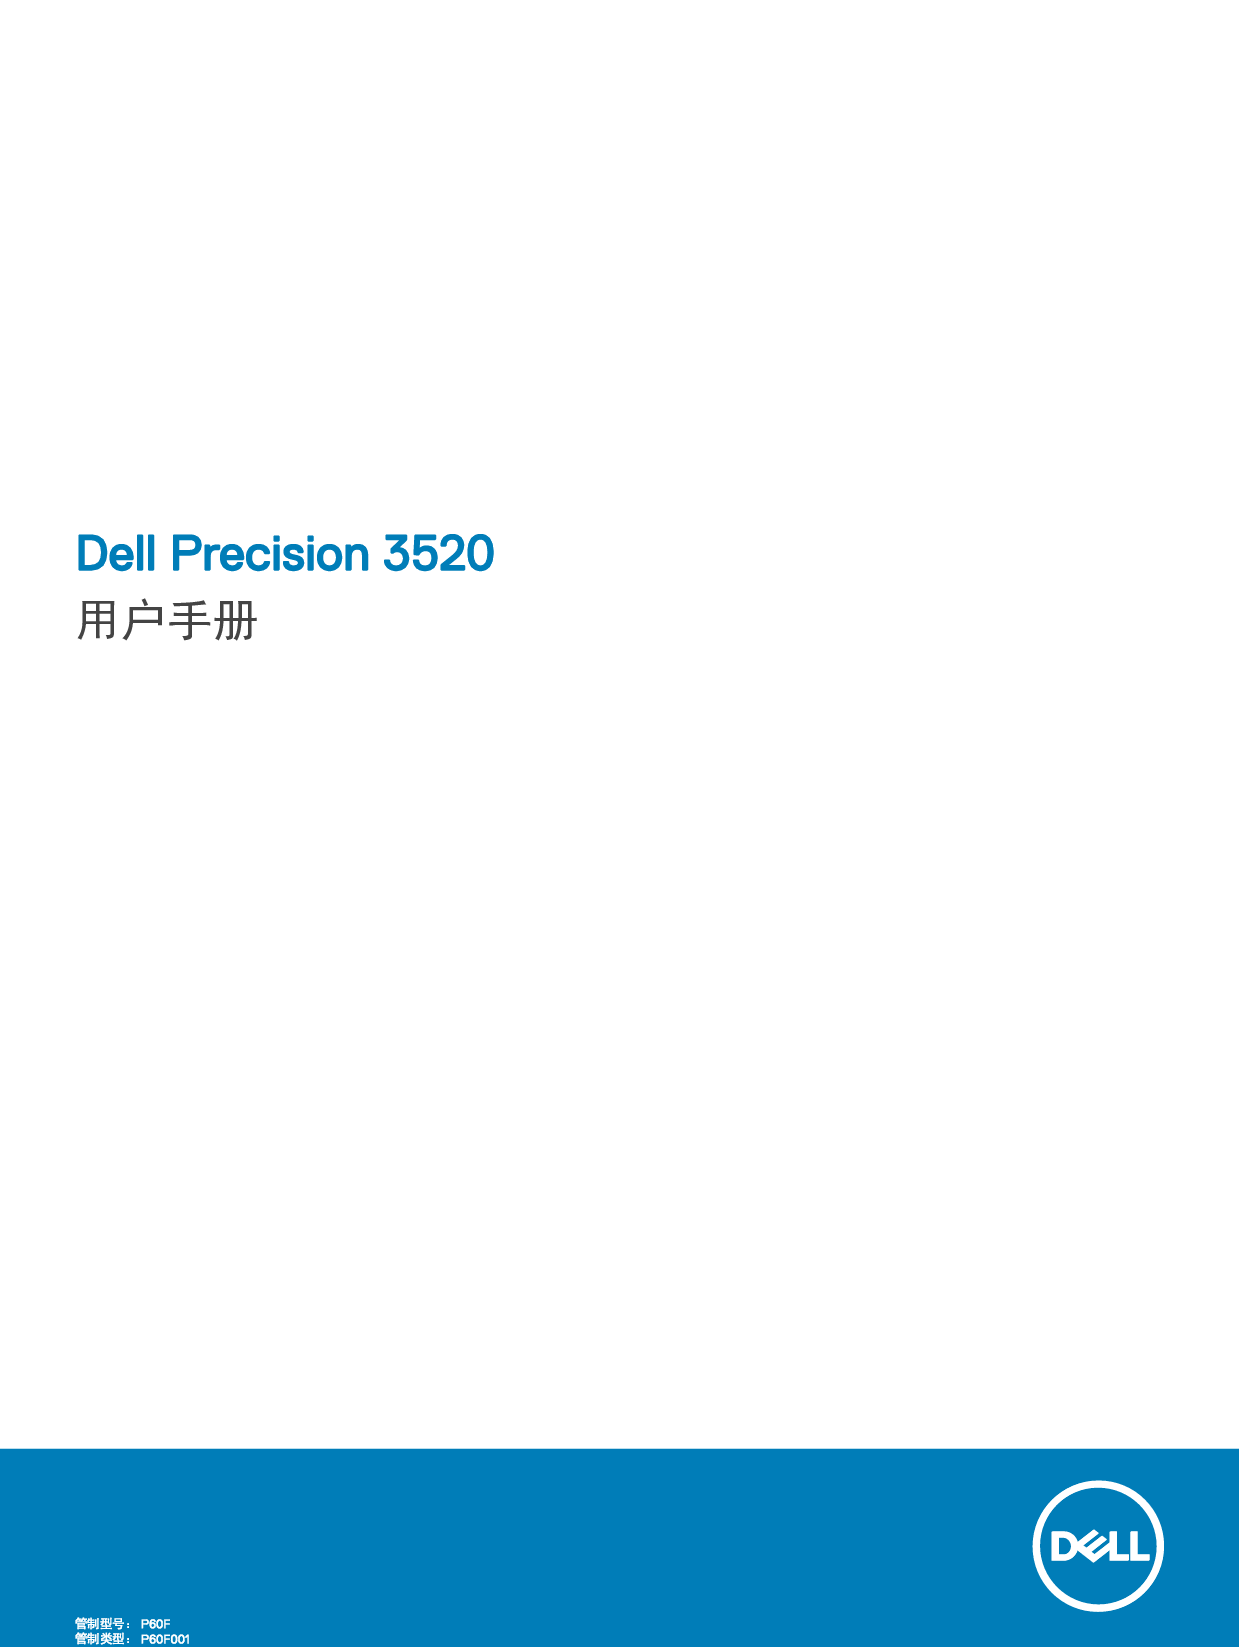 戴尔 Dell Precision 3520 用户手册 封面